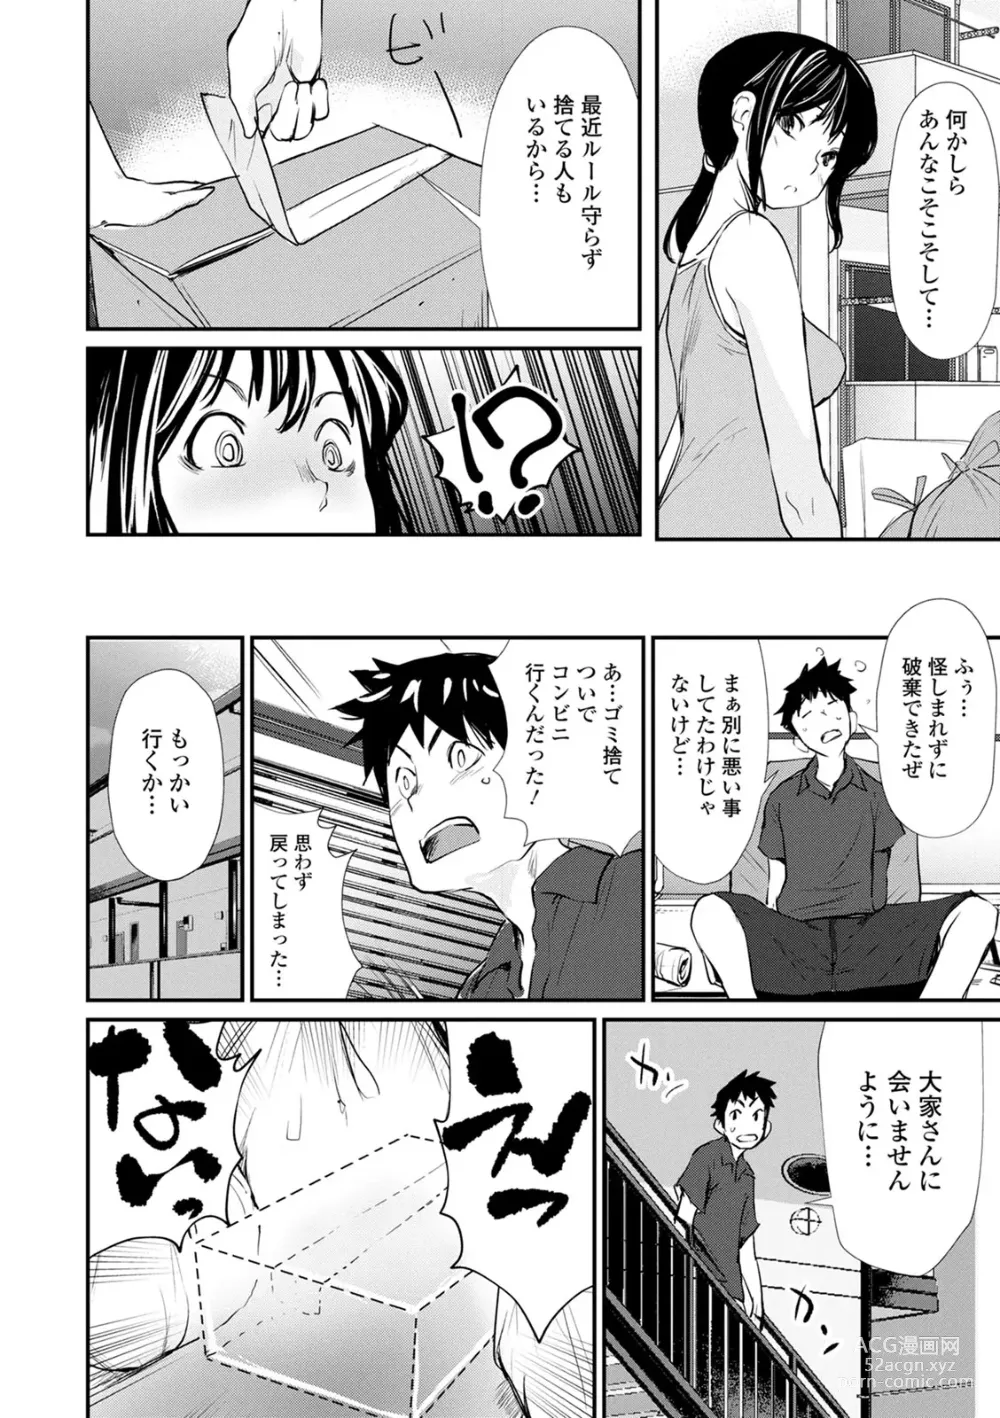 Page 6 of manga Hadaka Asobi